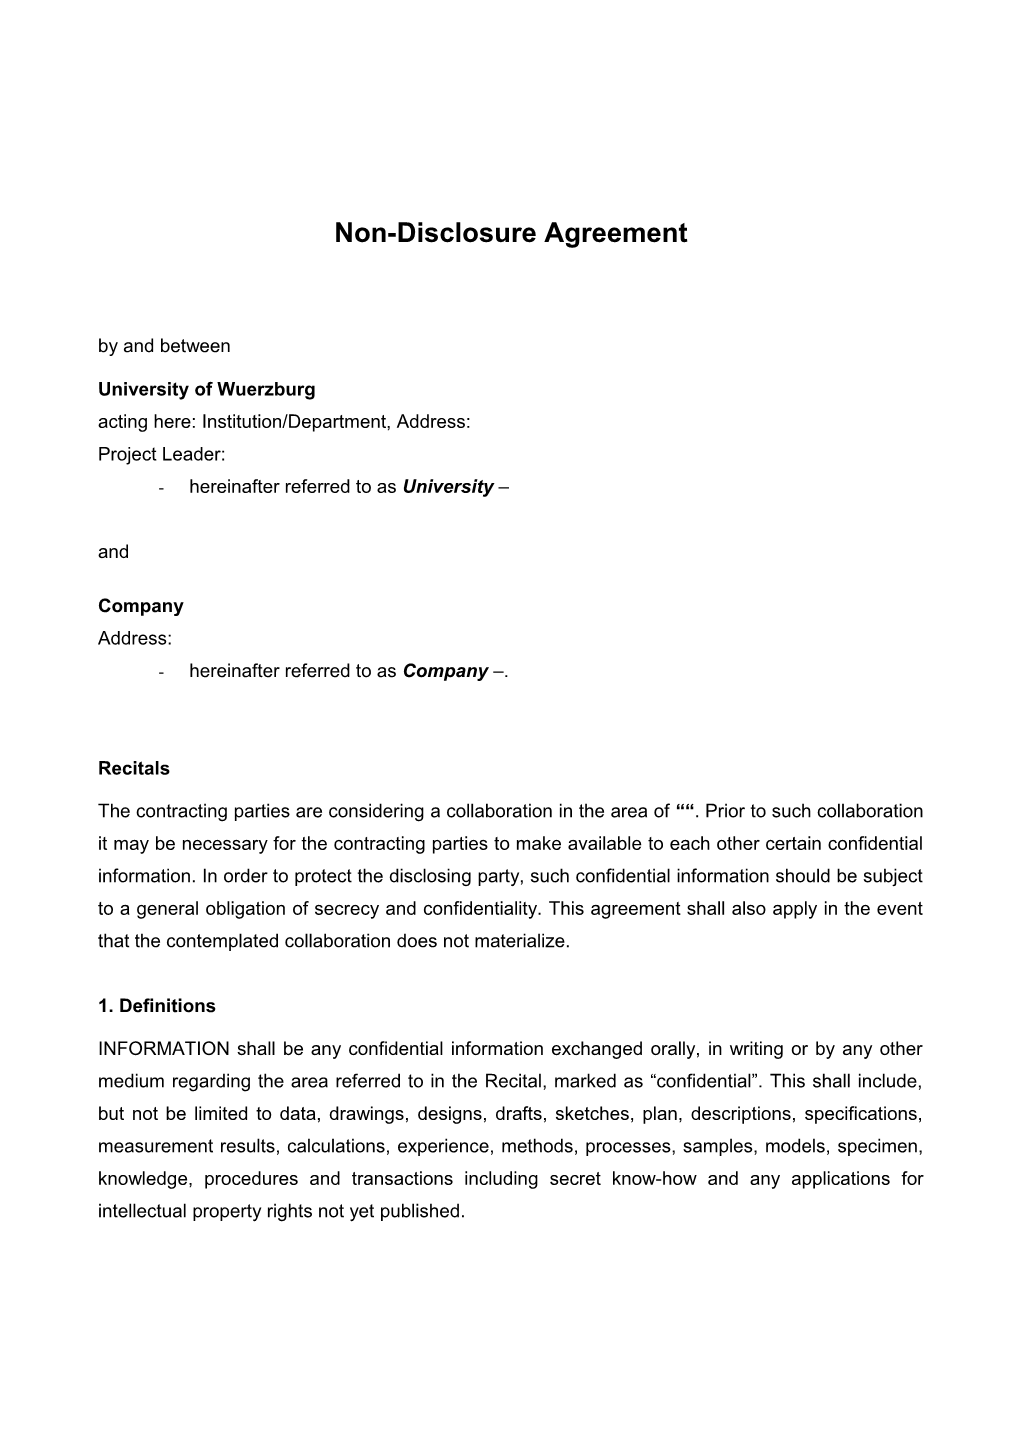 Non-Disclosure Agreement s6